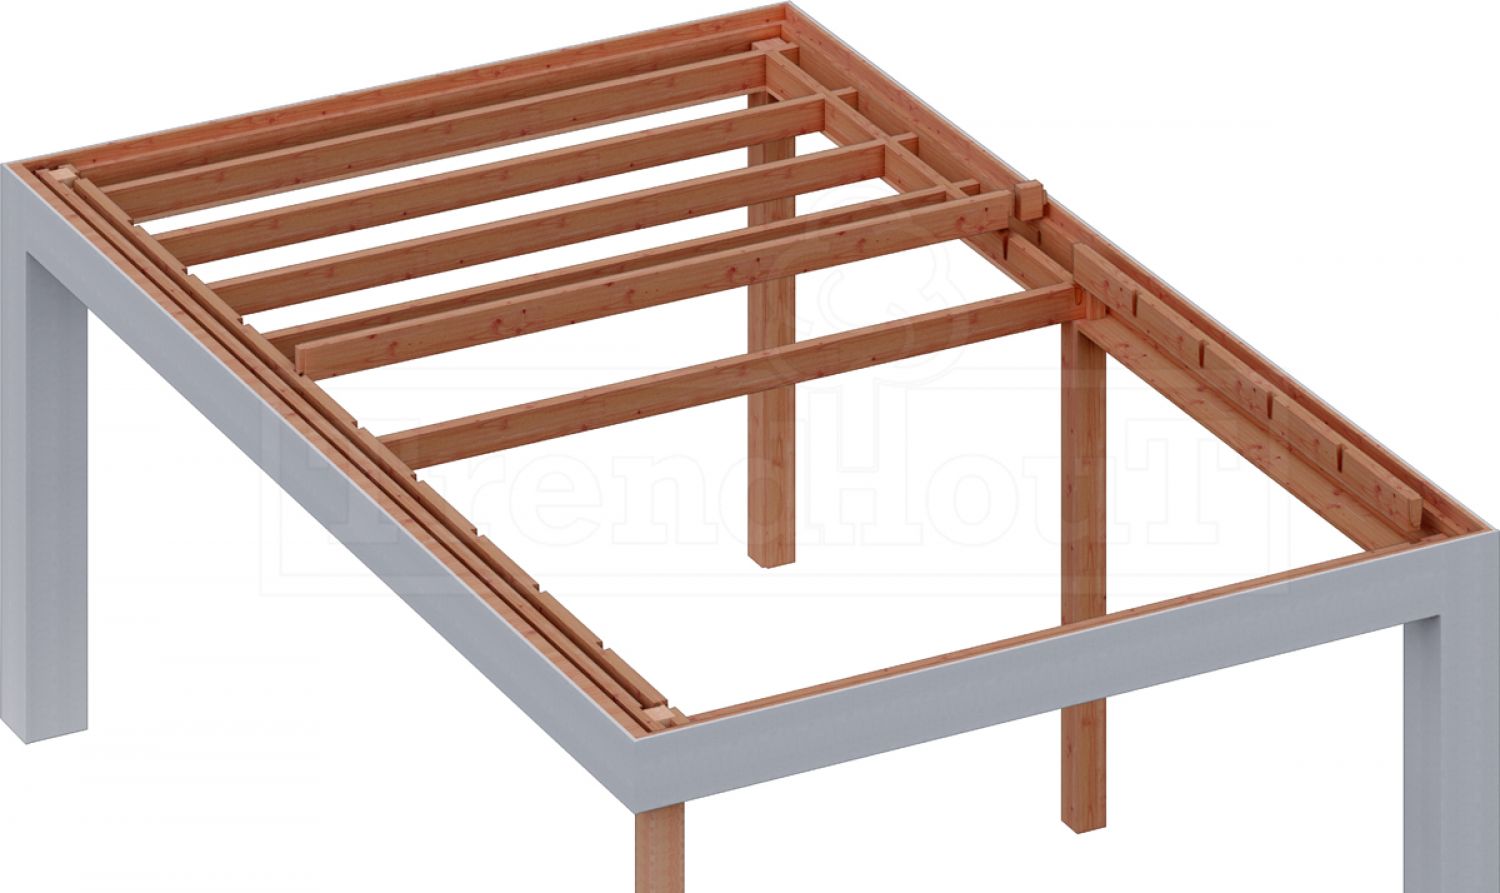 Buitenverblijf Verona 915x400 cm - Plat dak model links